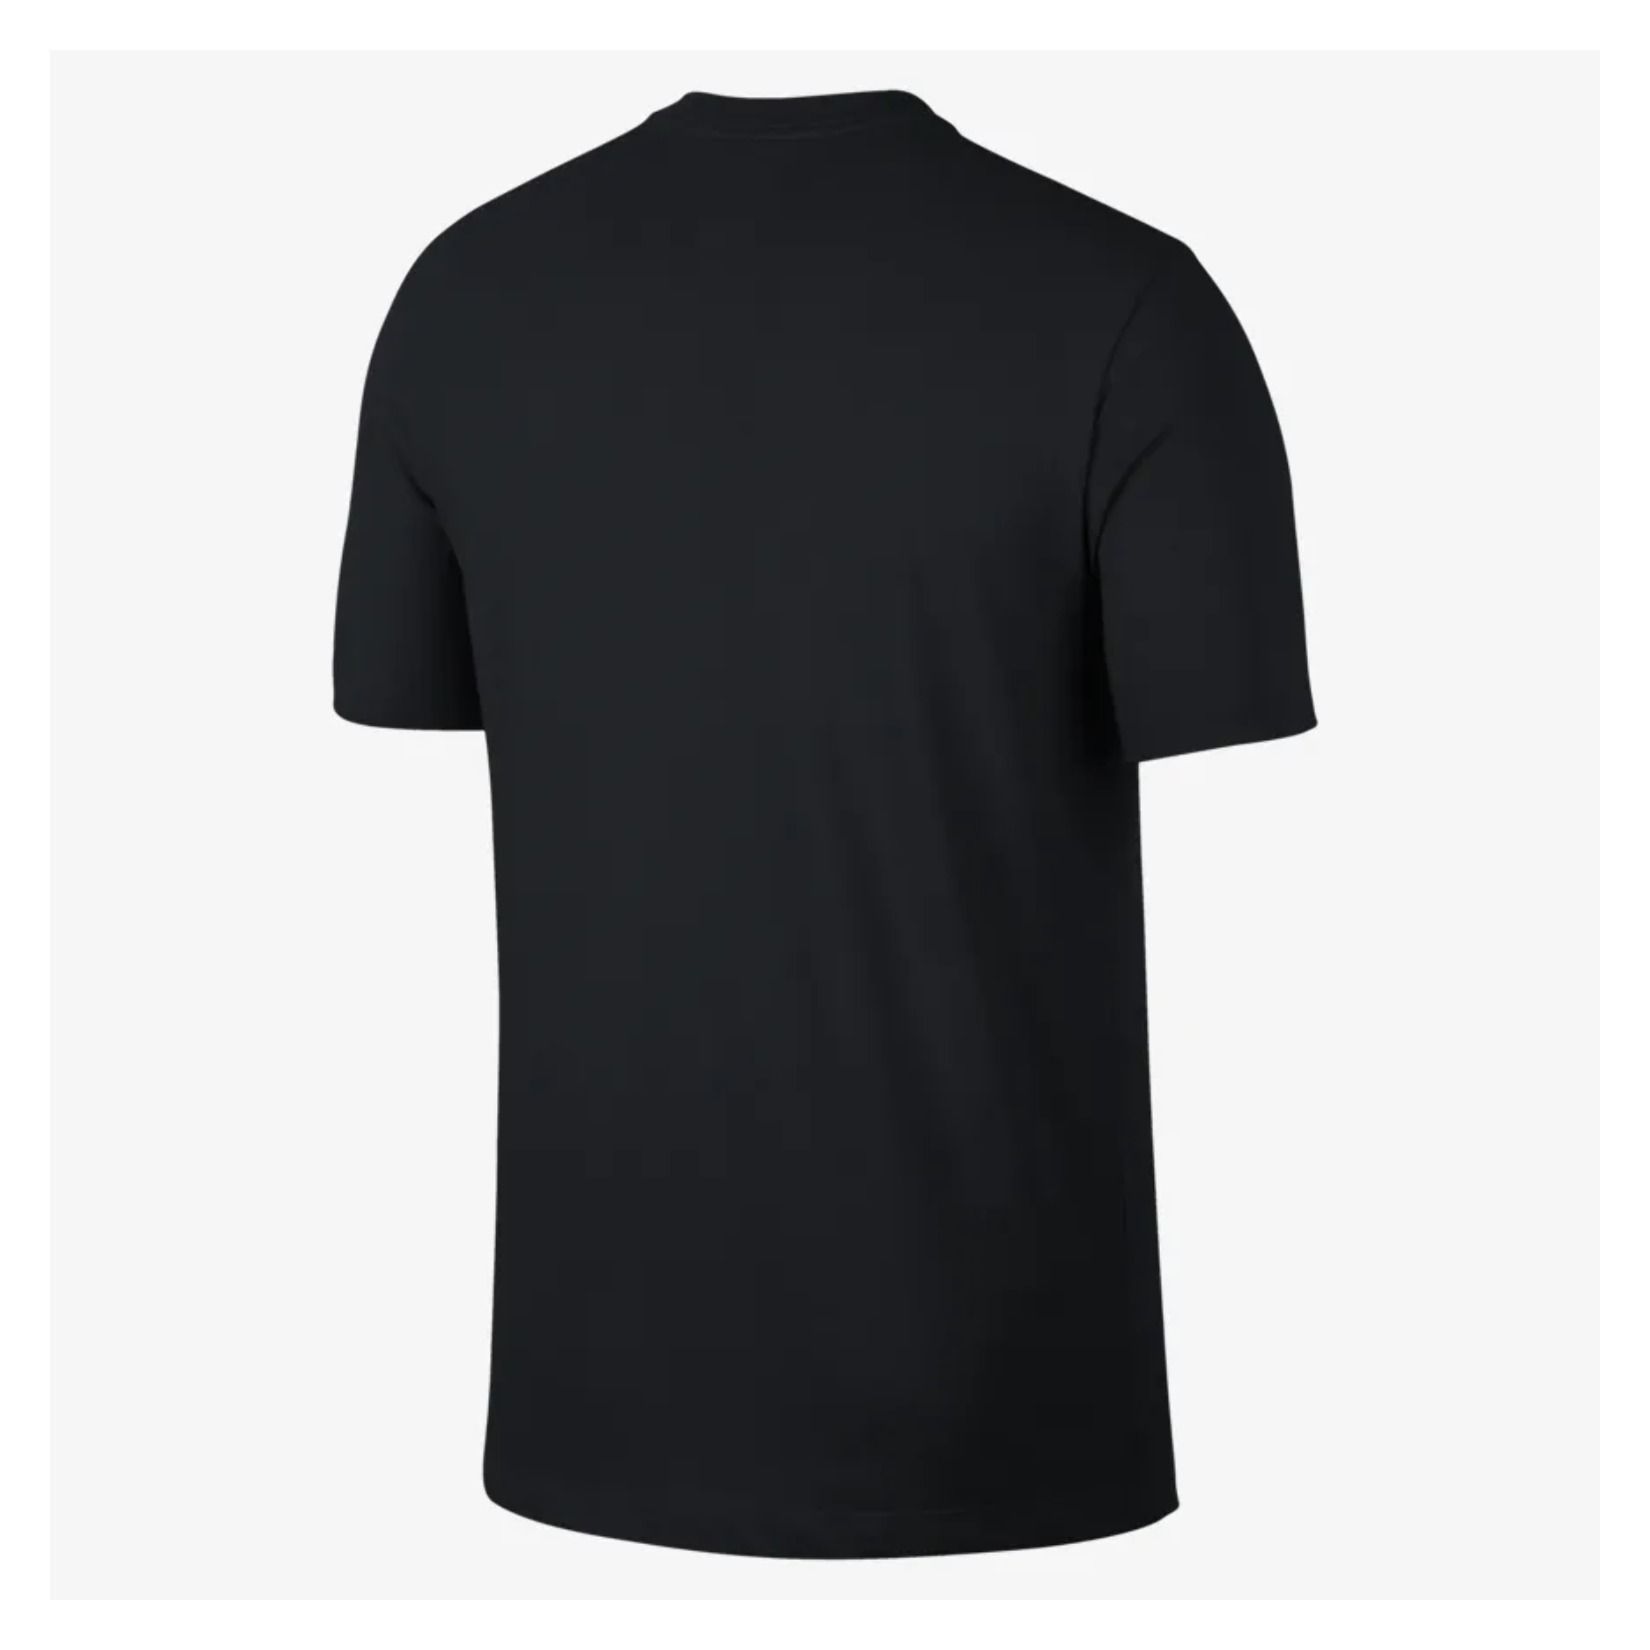 Nike Dri-FIT Training T-shirt - Kitlocker.com